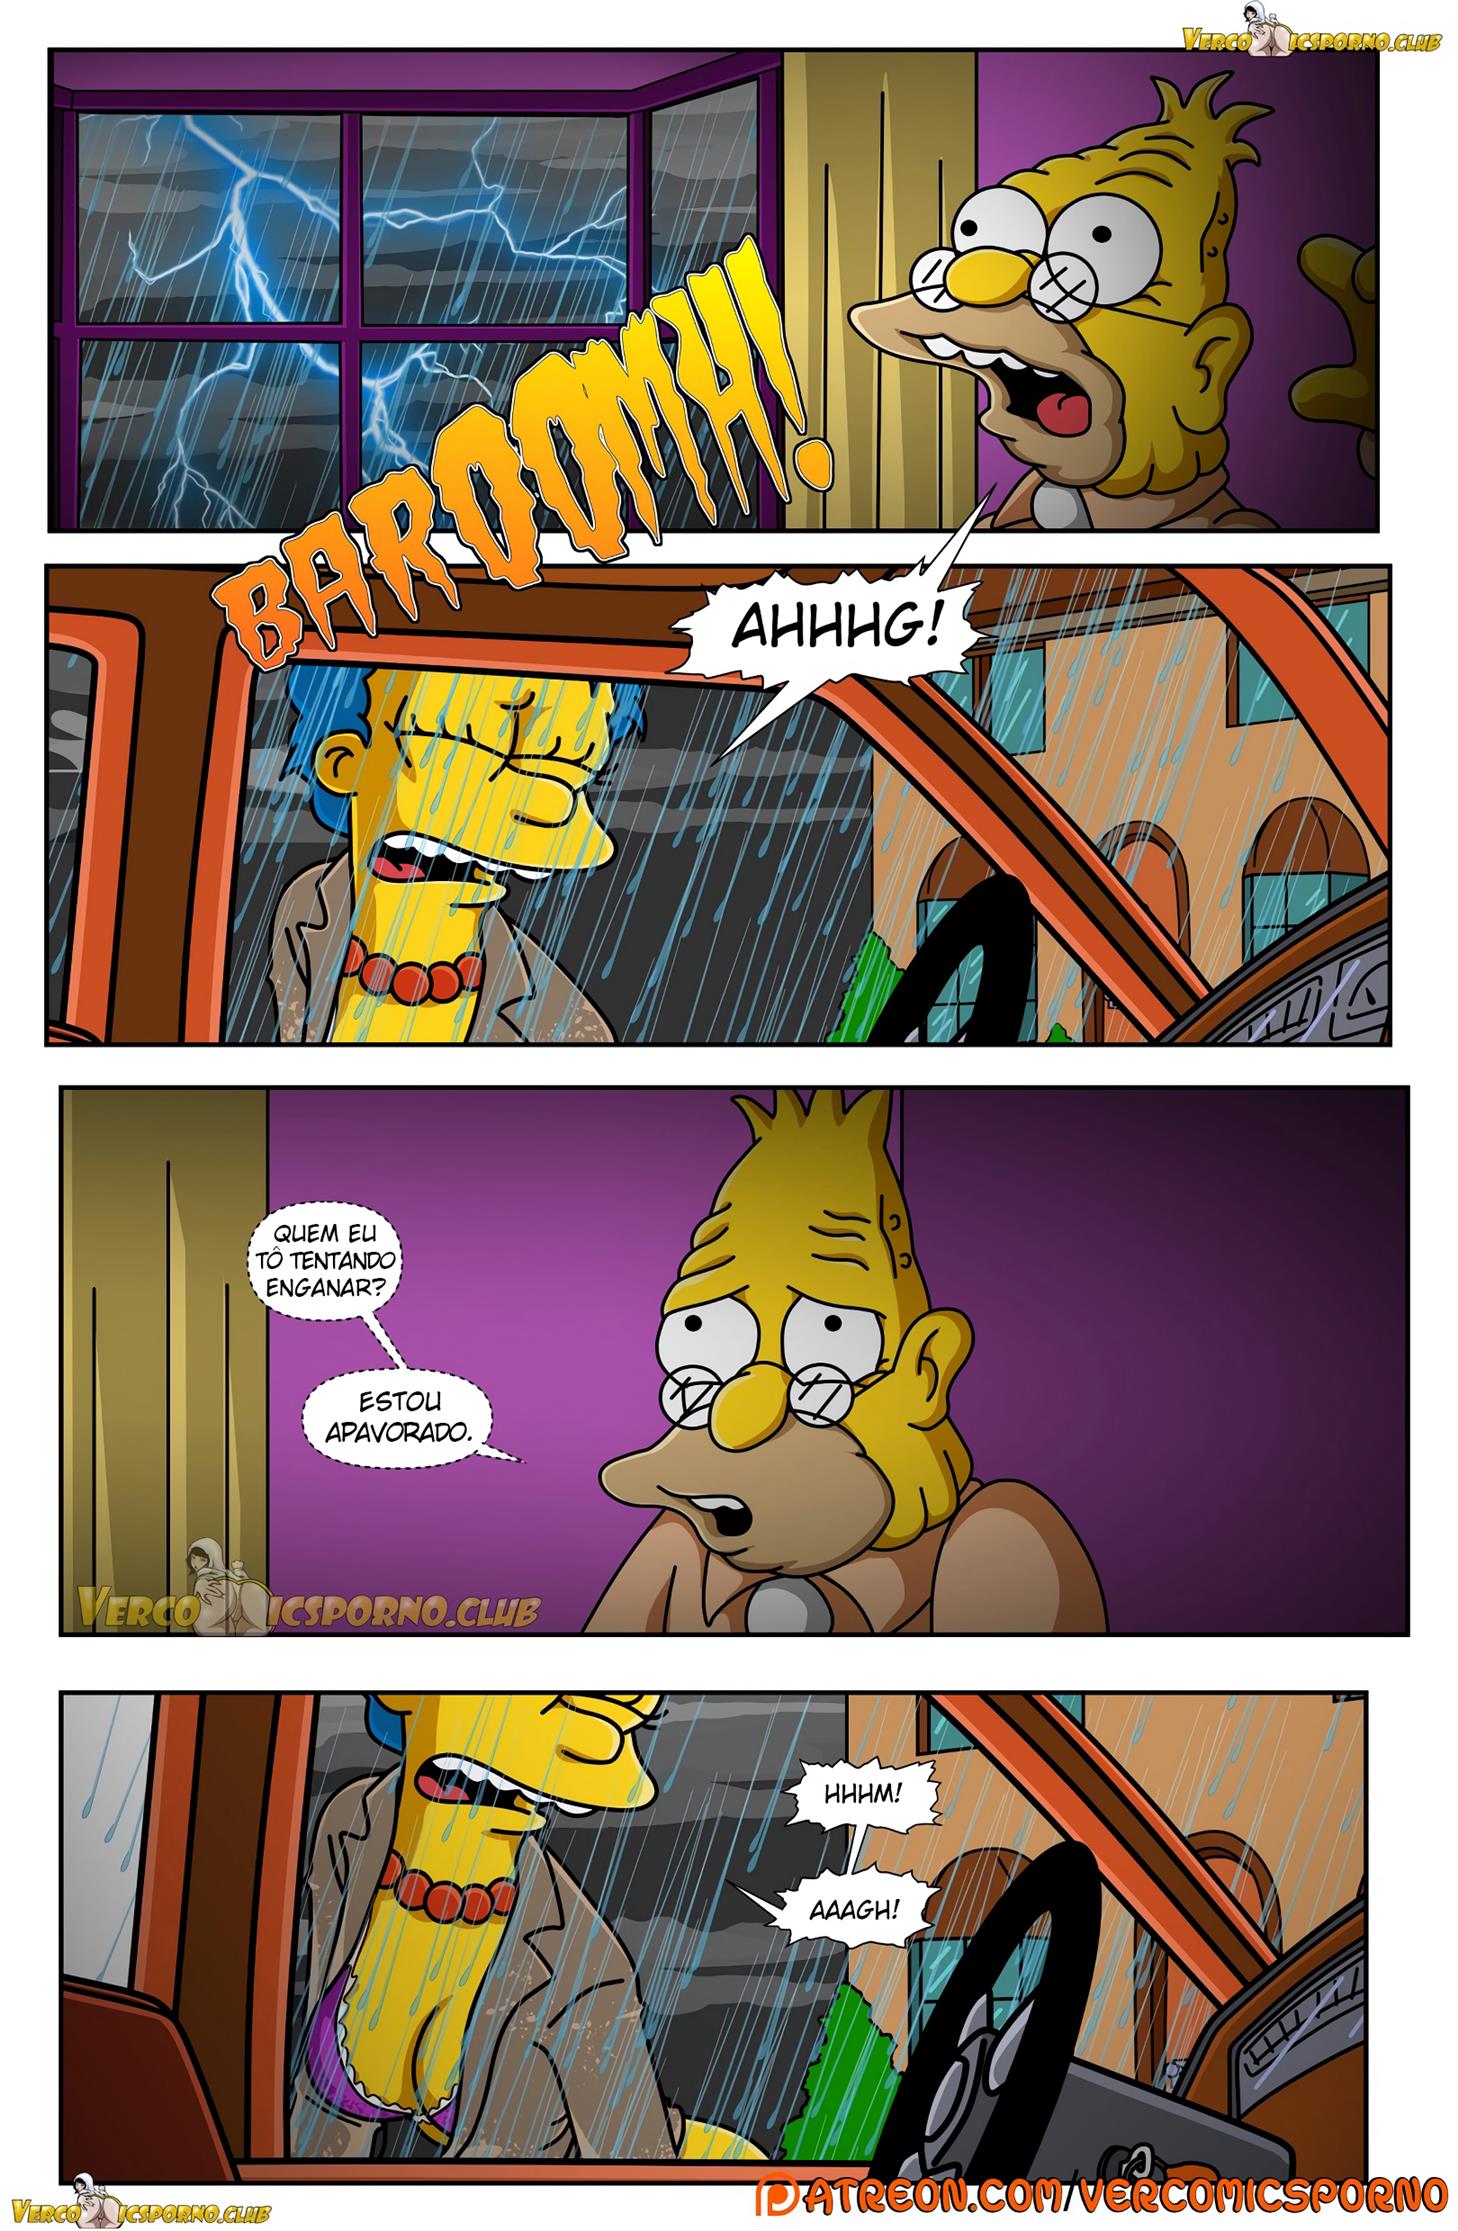 Vovô Simpson tarado espiando a Marge Simpson Hentai